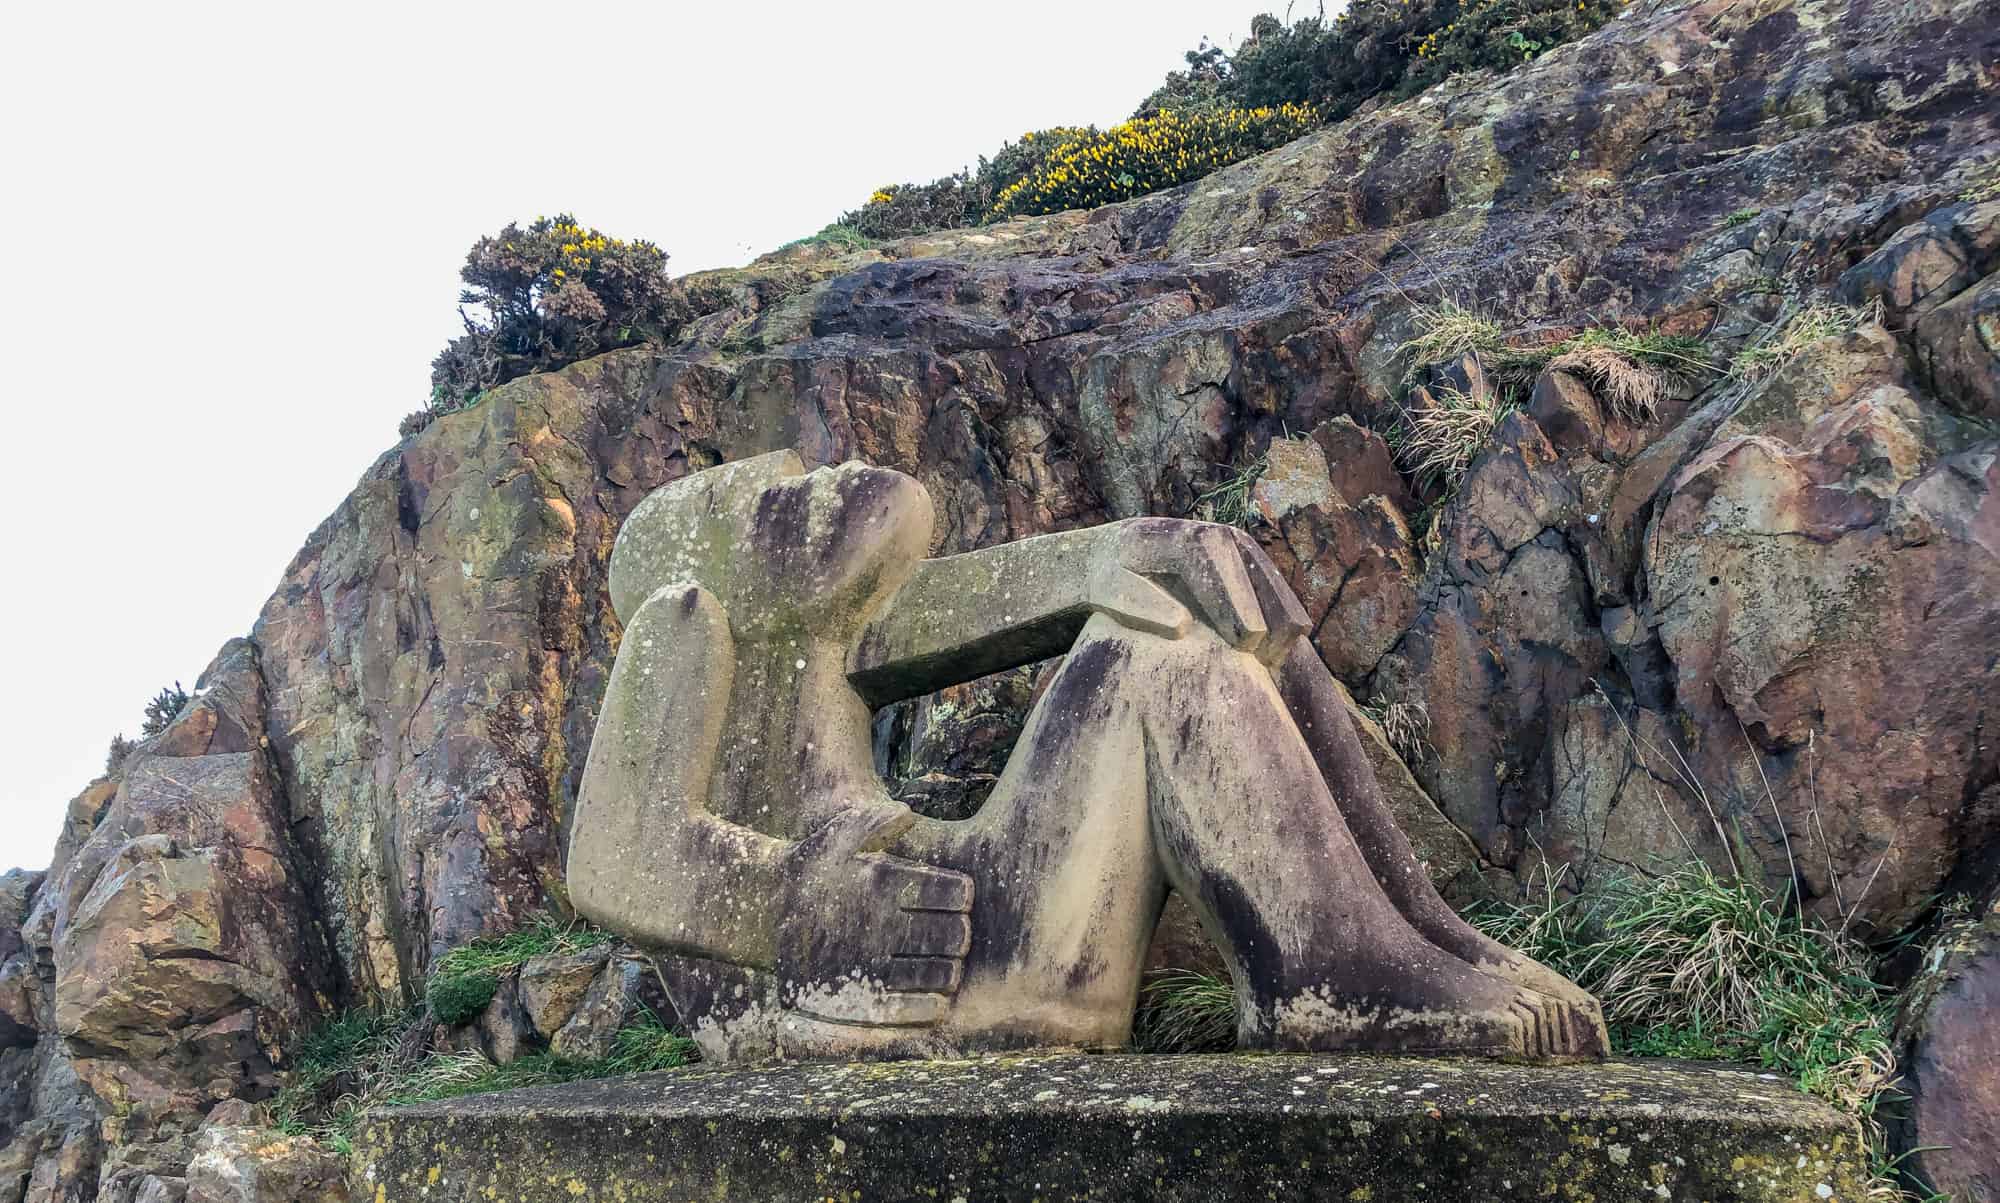 Wales - Pembrokeshire - Fishguard stone sculpture on harbour